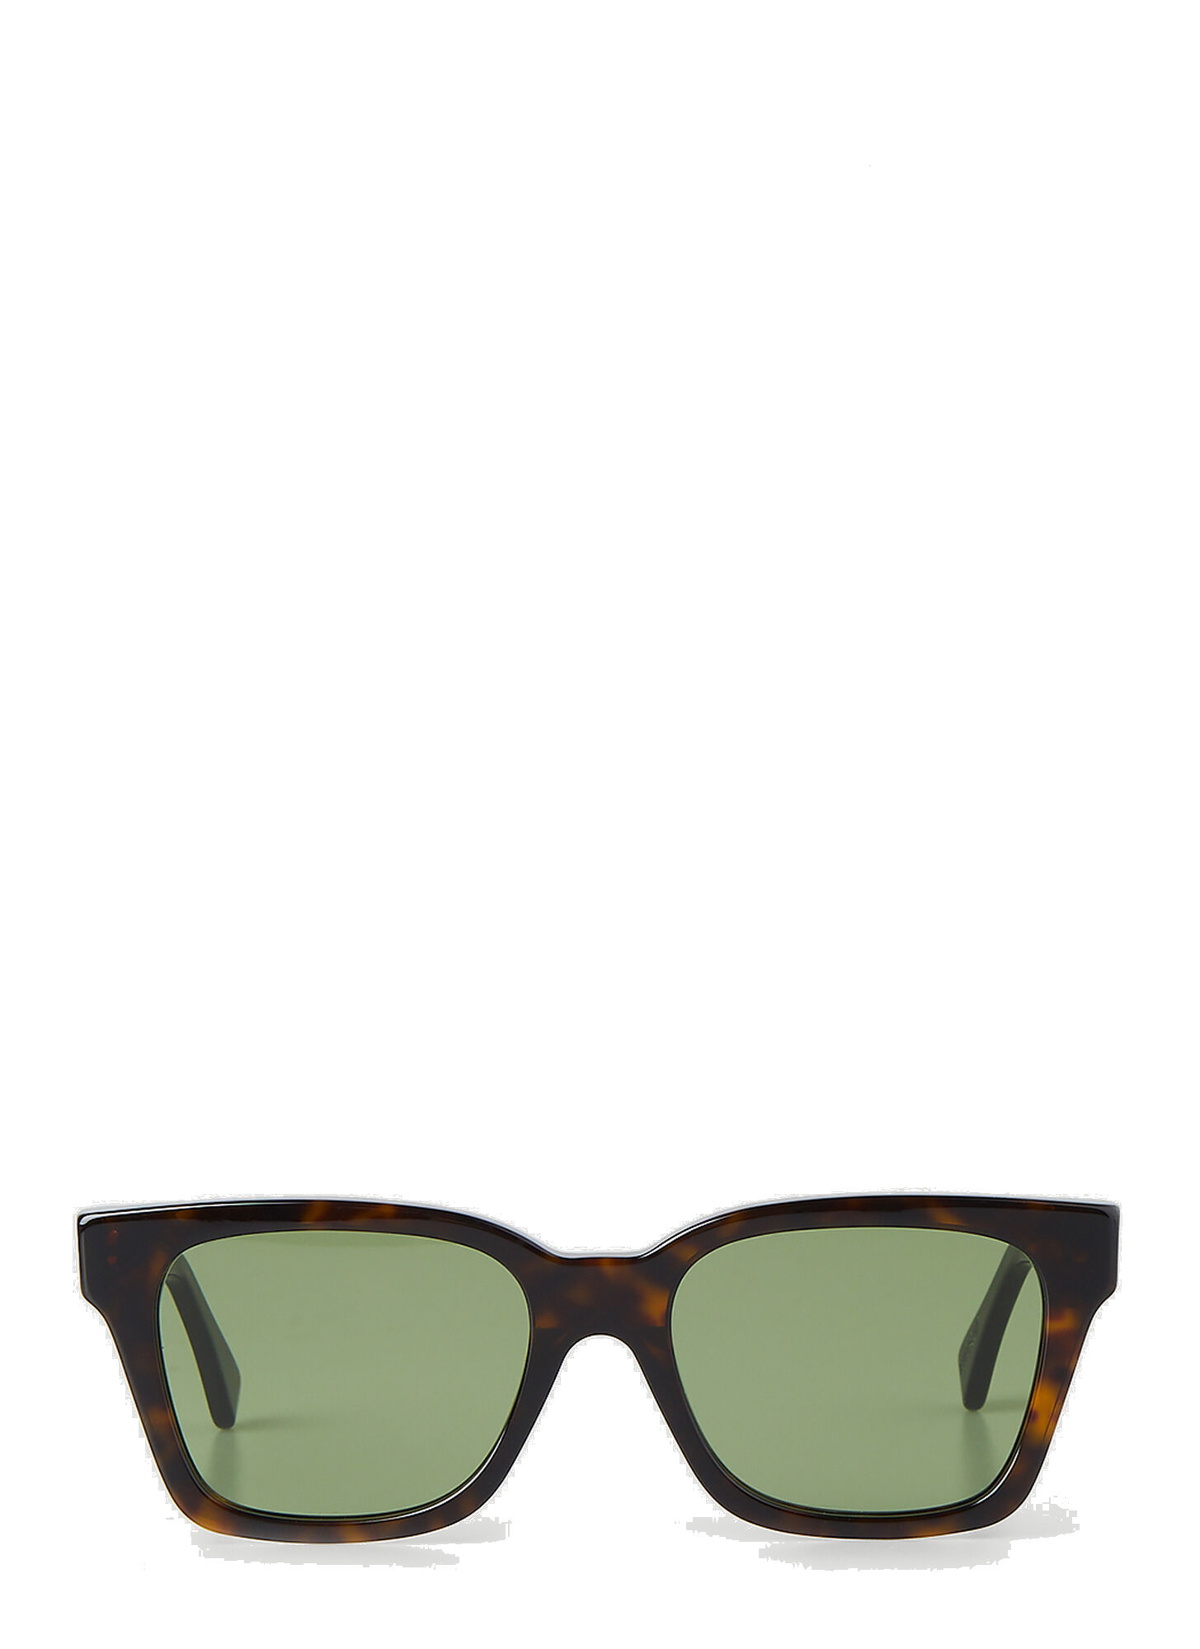 America 3627 Sunglasses in Brown RETROSUPERFUTURE